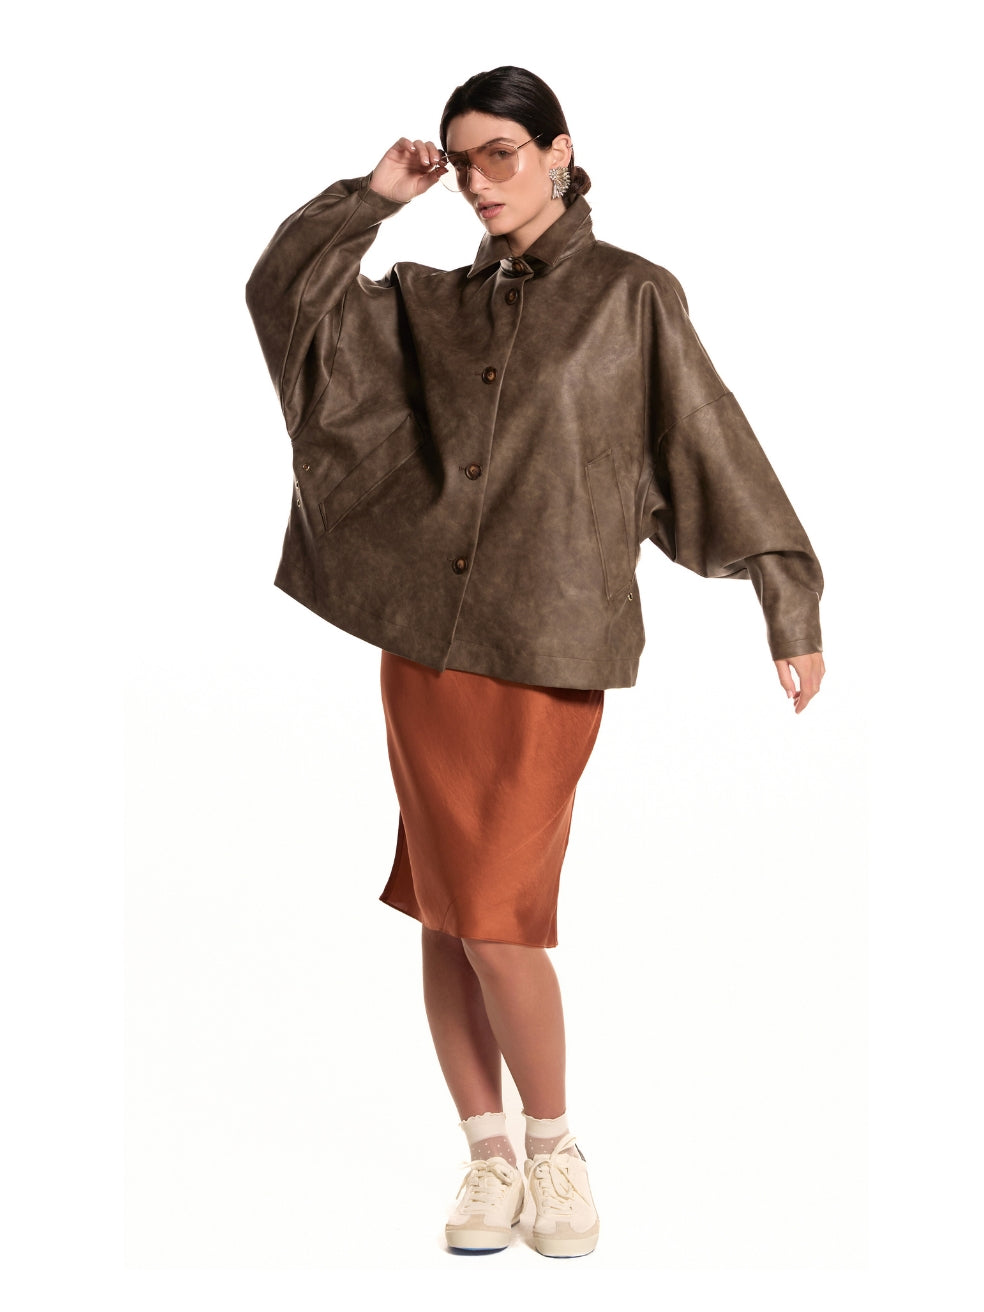 Ryder batwing coat oversized sleeves vintage brown distressed vegan leather spring